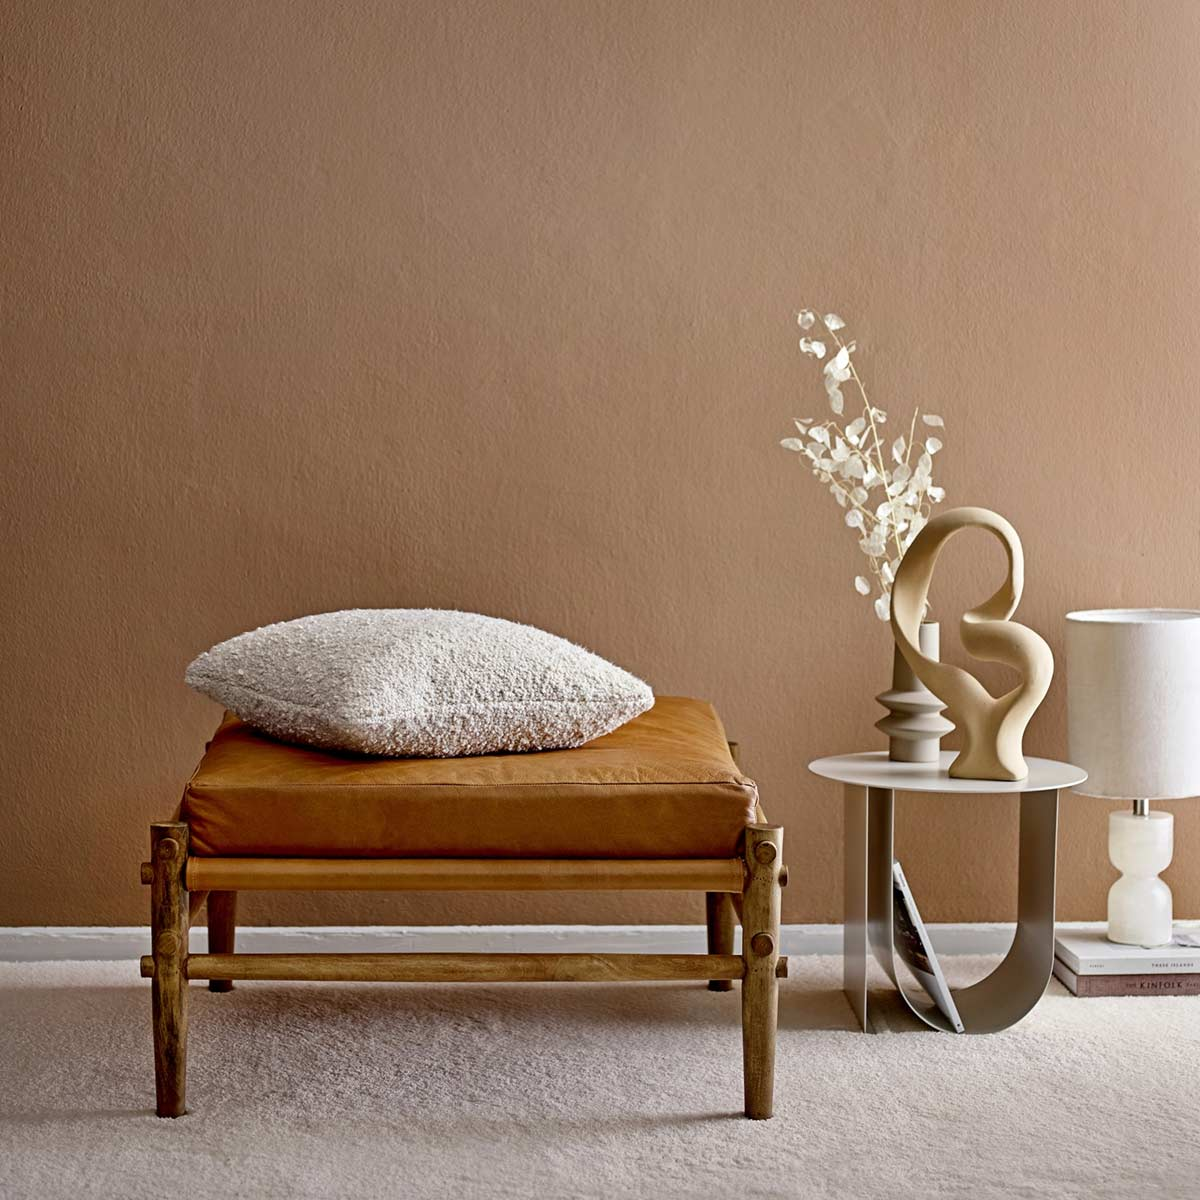 Cuscino elegante per divano in cotone naturale Bloomingville